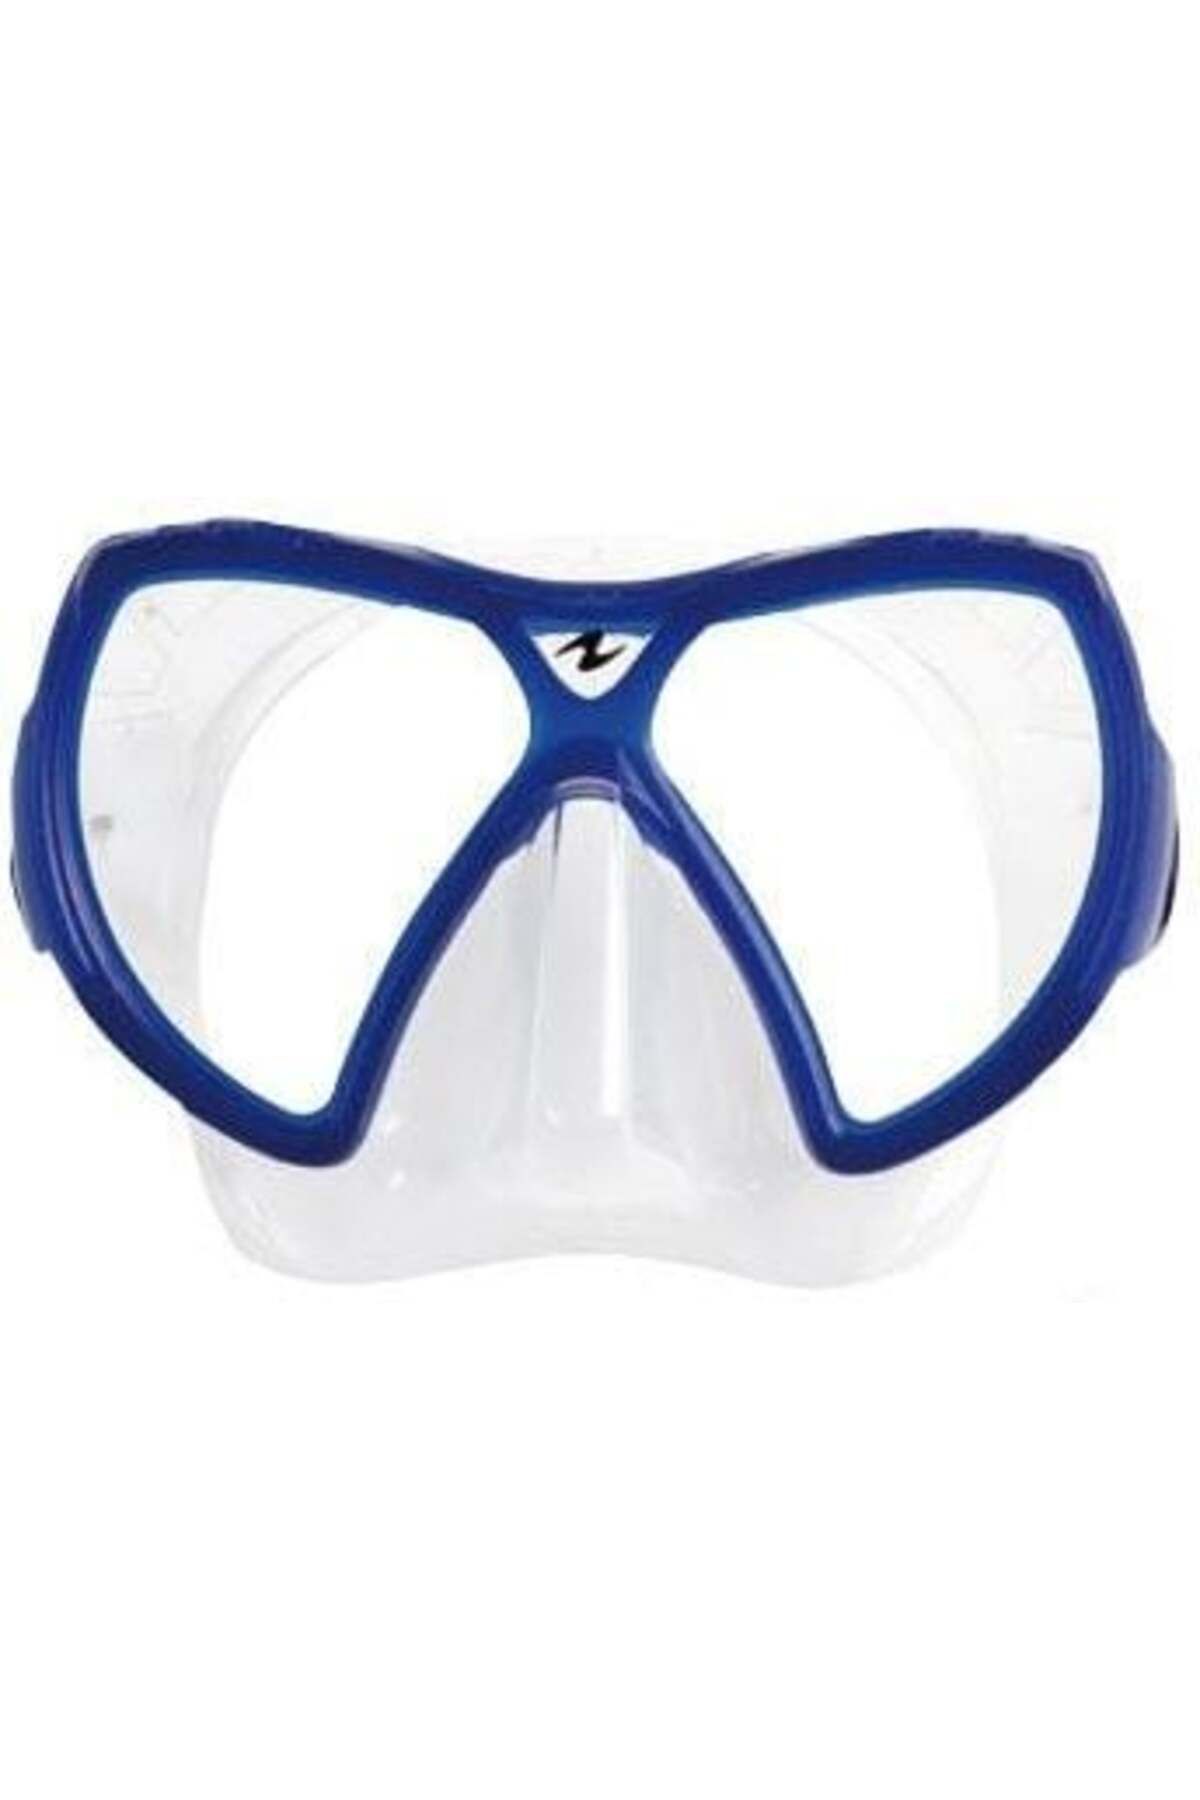 Aqua Lung Visionflex Lx Mavi Maske